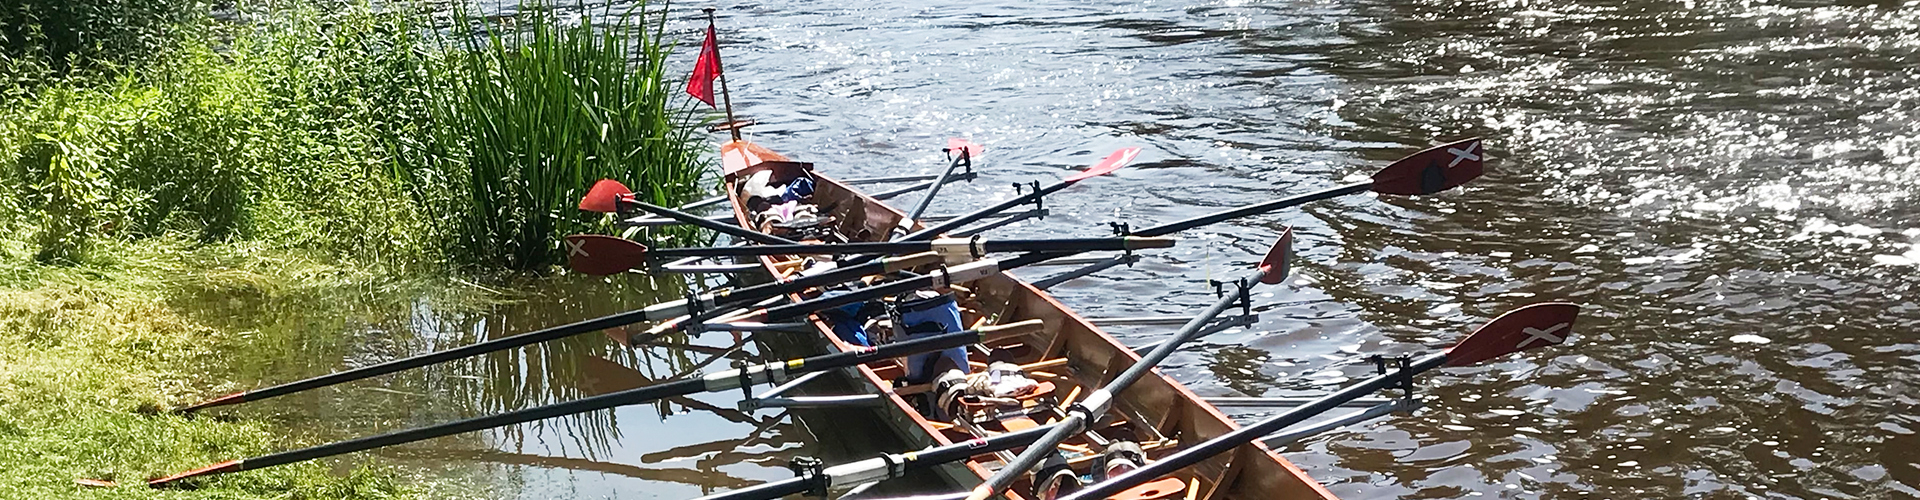 Vienna Rowing Challenge 2017